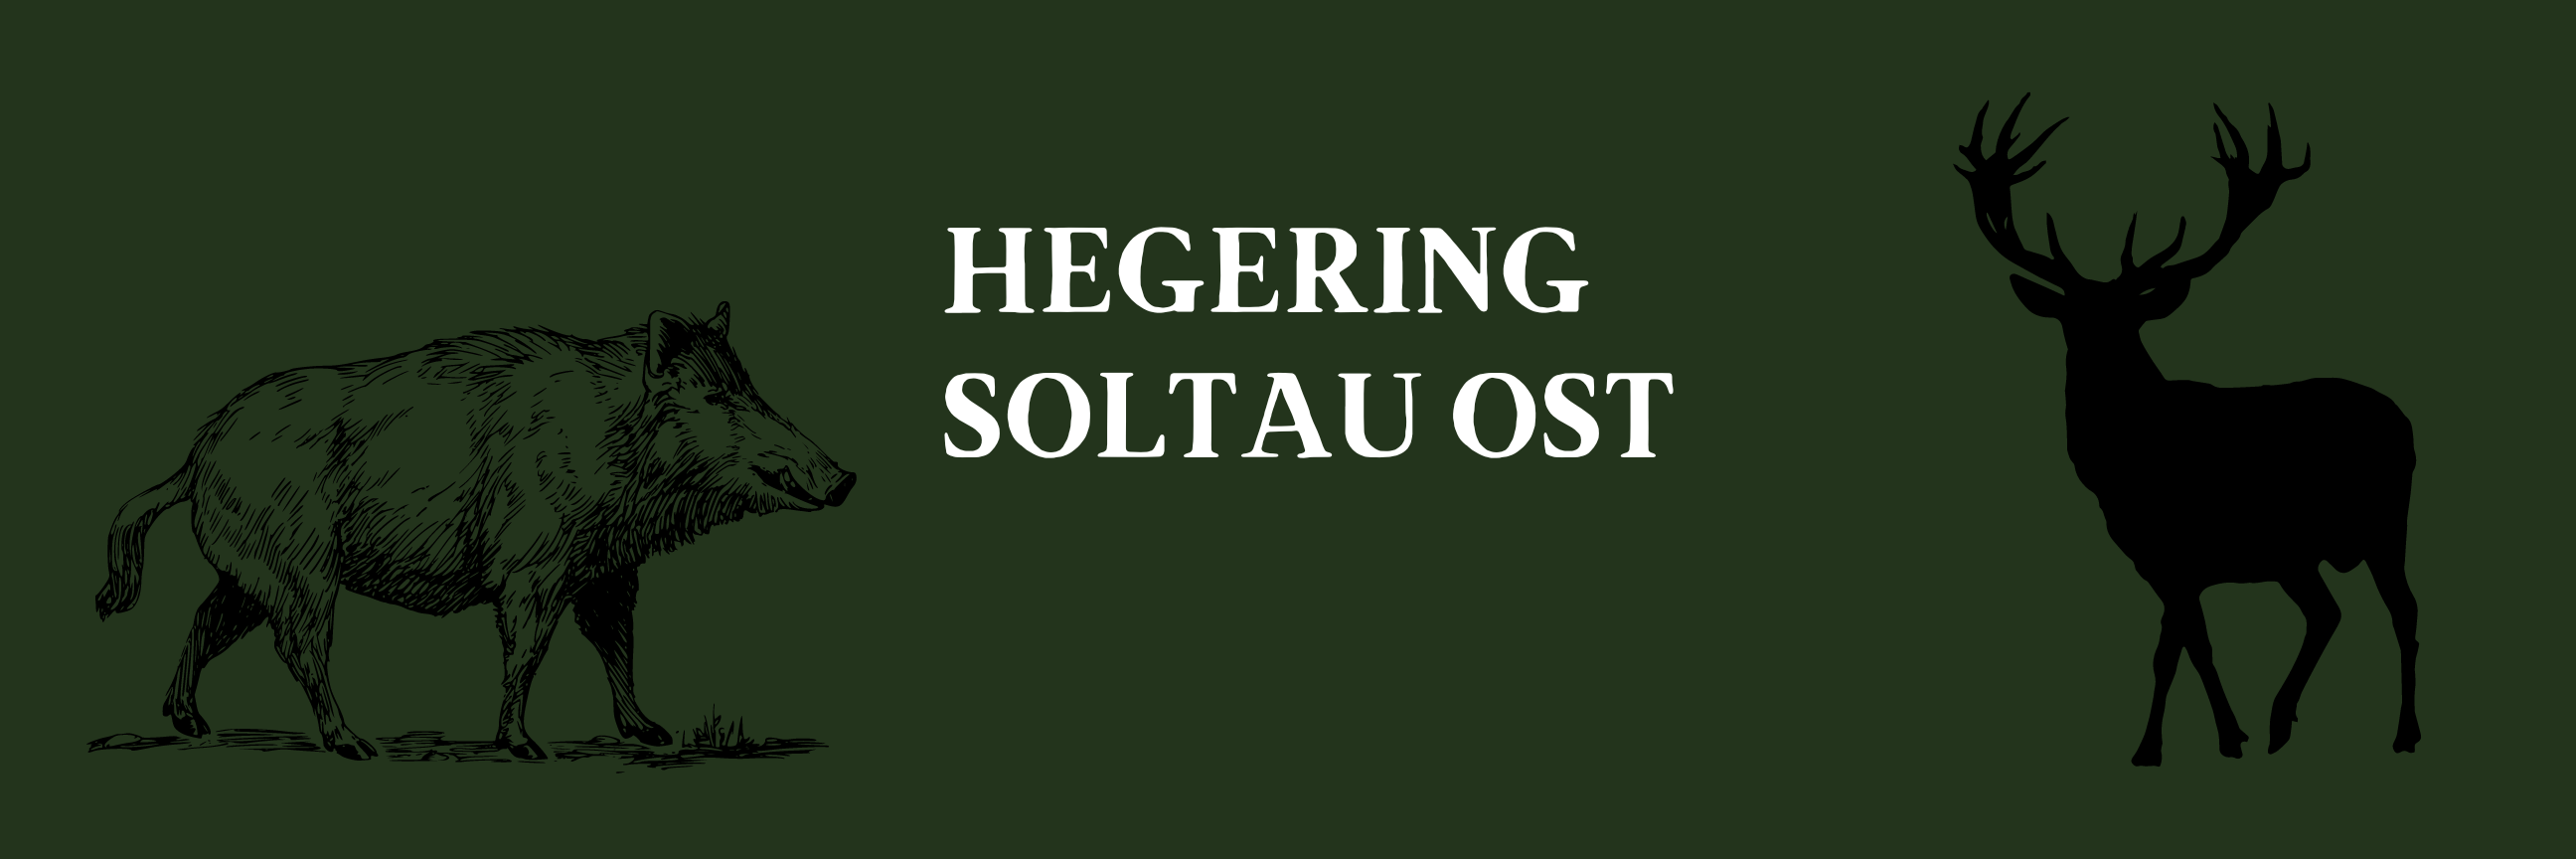 Hegering Soltau-Ost